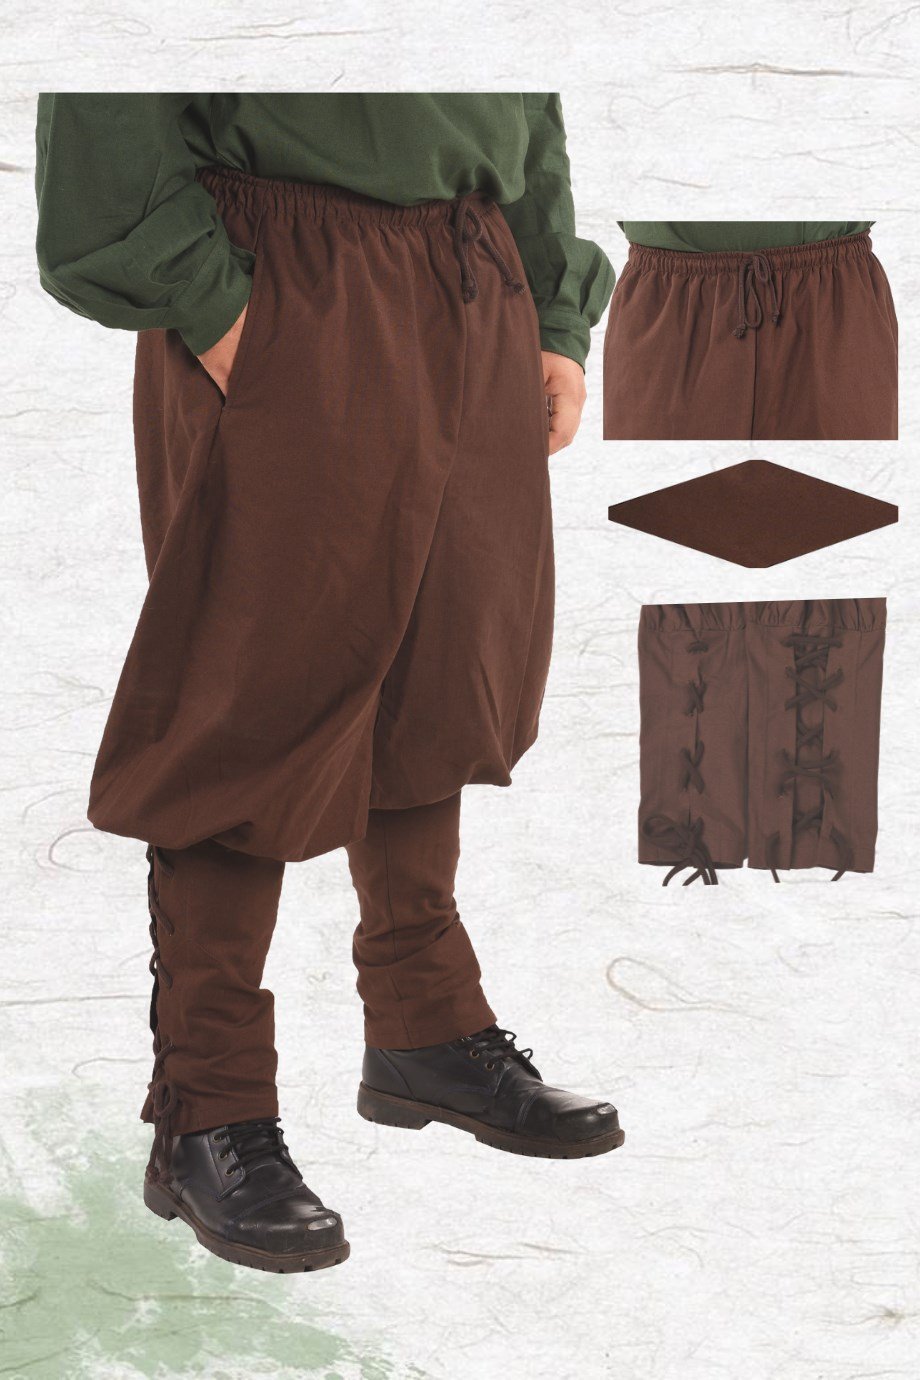 WUNITT Cotton Brown Pants - Medieval Viking Larp and Renaissance